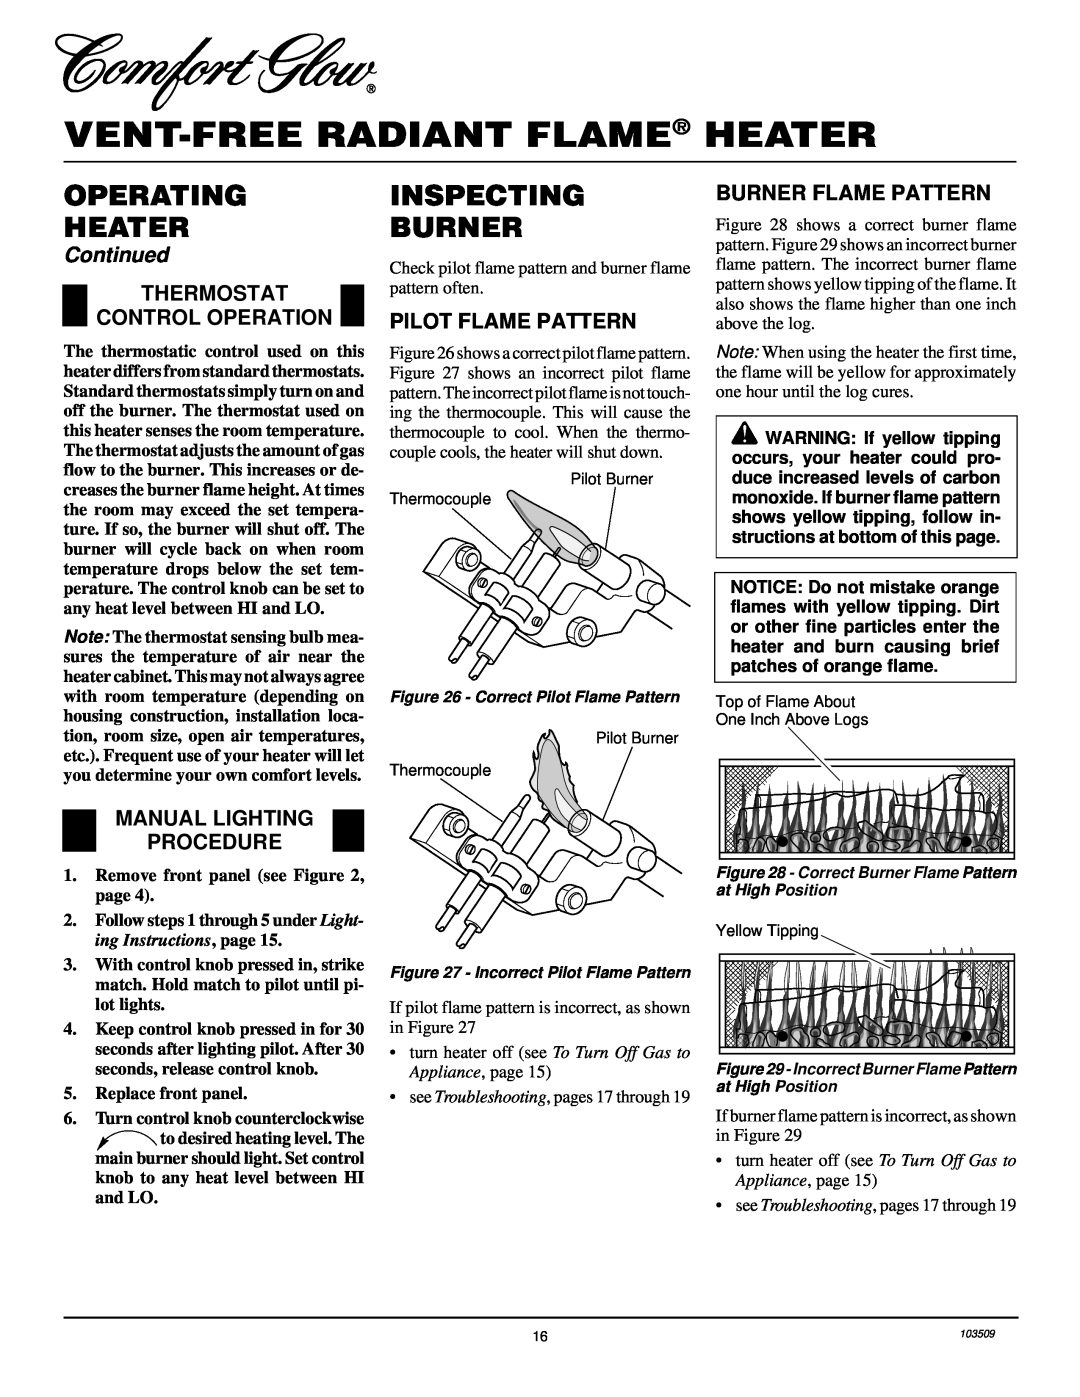 Desa Tech RFP28TC Inspecting Burner, Thermostat Control Operation, Manual Lighting Procedure, Pilot Flame Pattern 